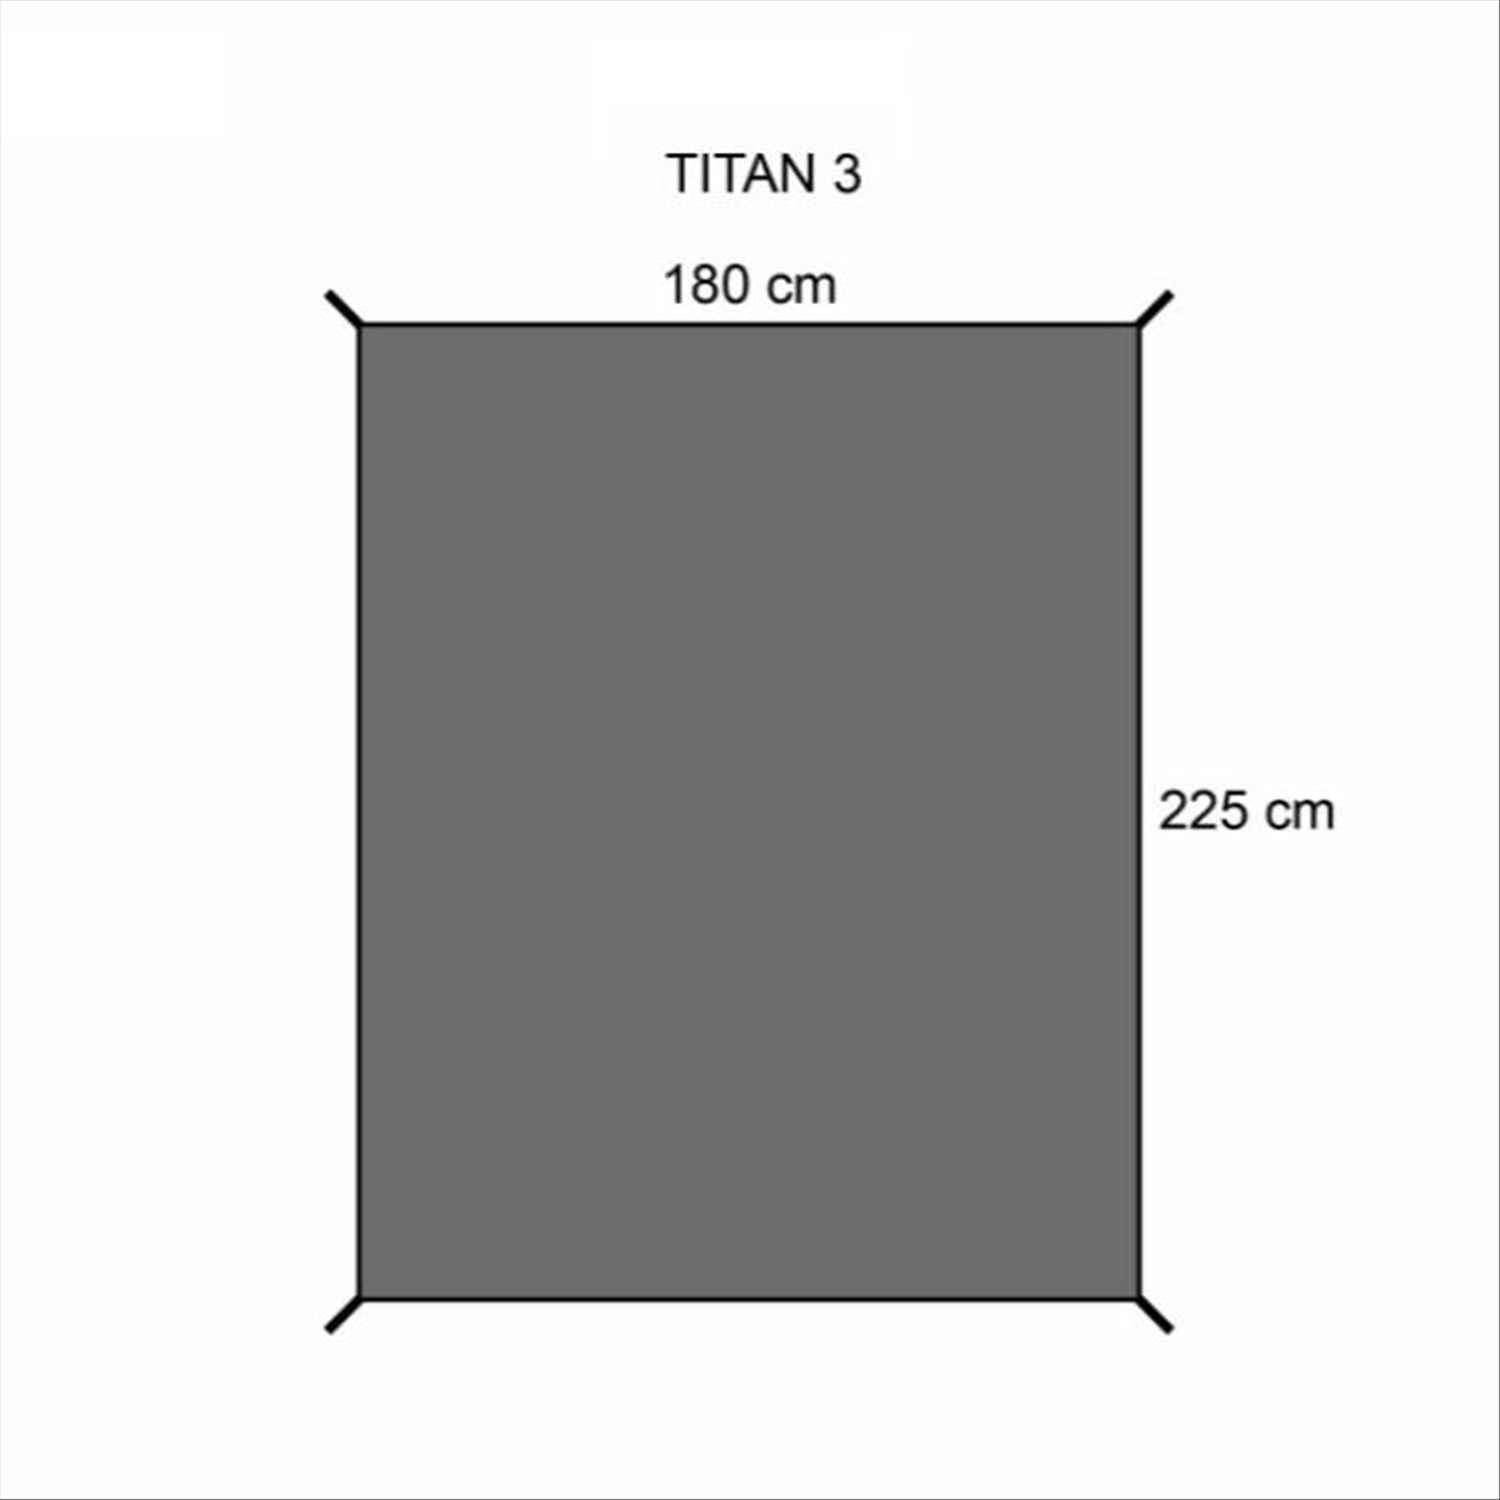 Titan 3 Tent Groundsheet - 225 x 180cm